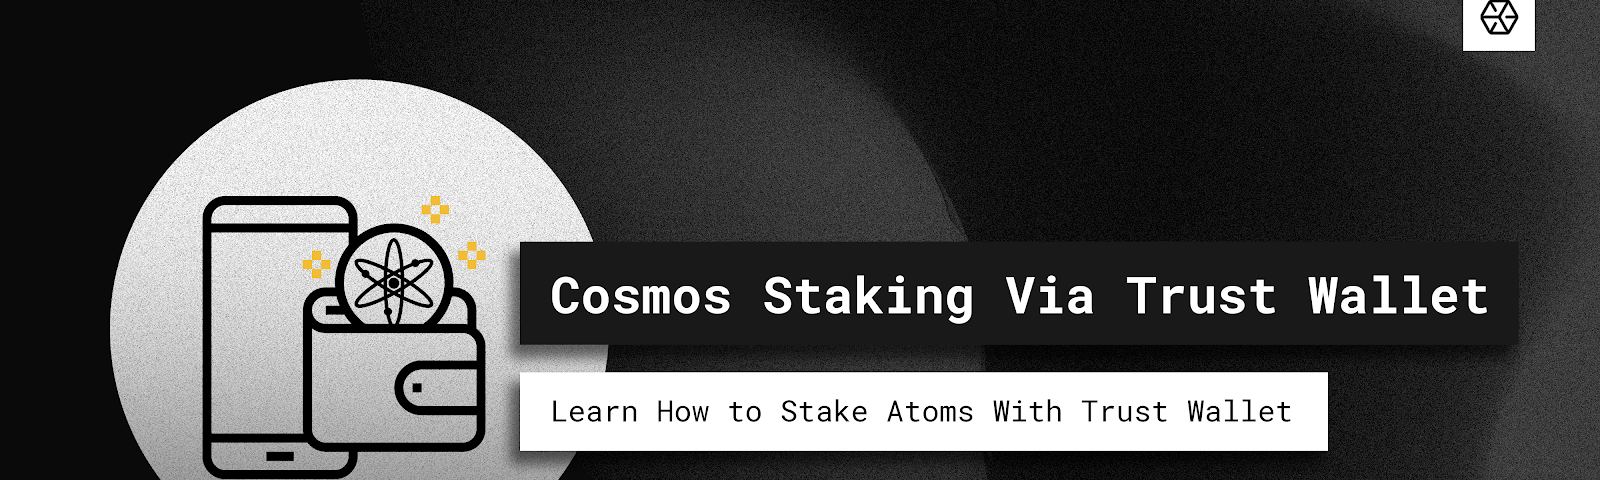 Cosmos Staking via Trust Wallet